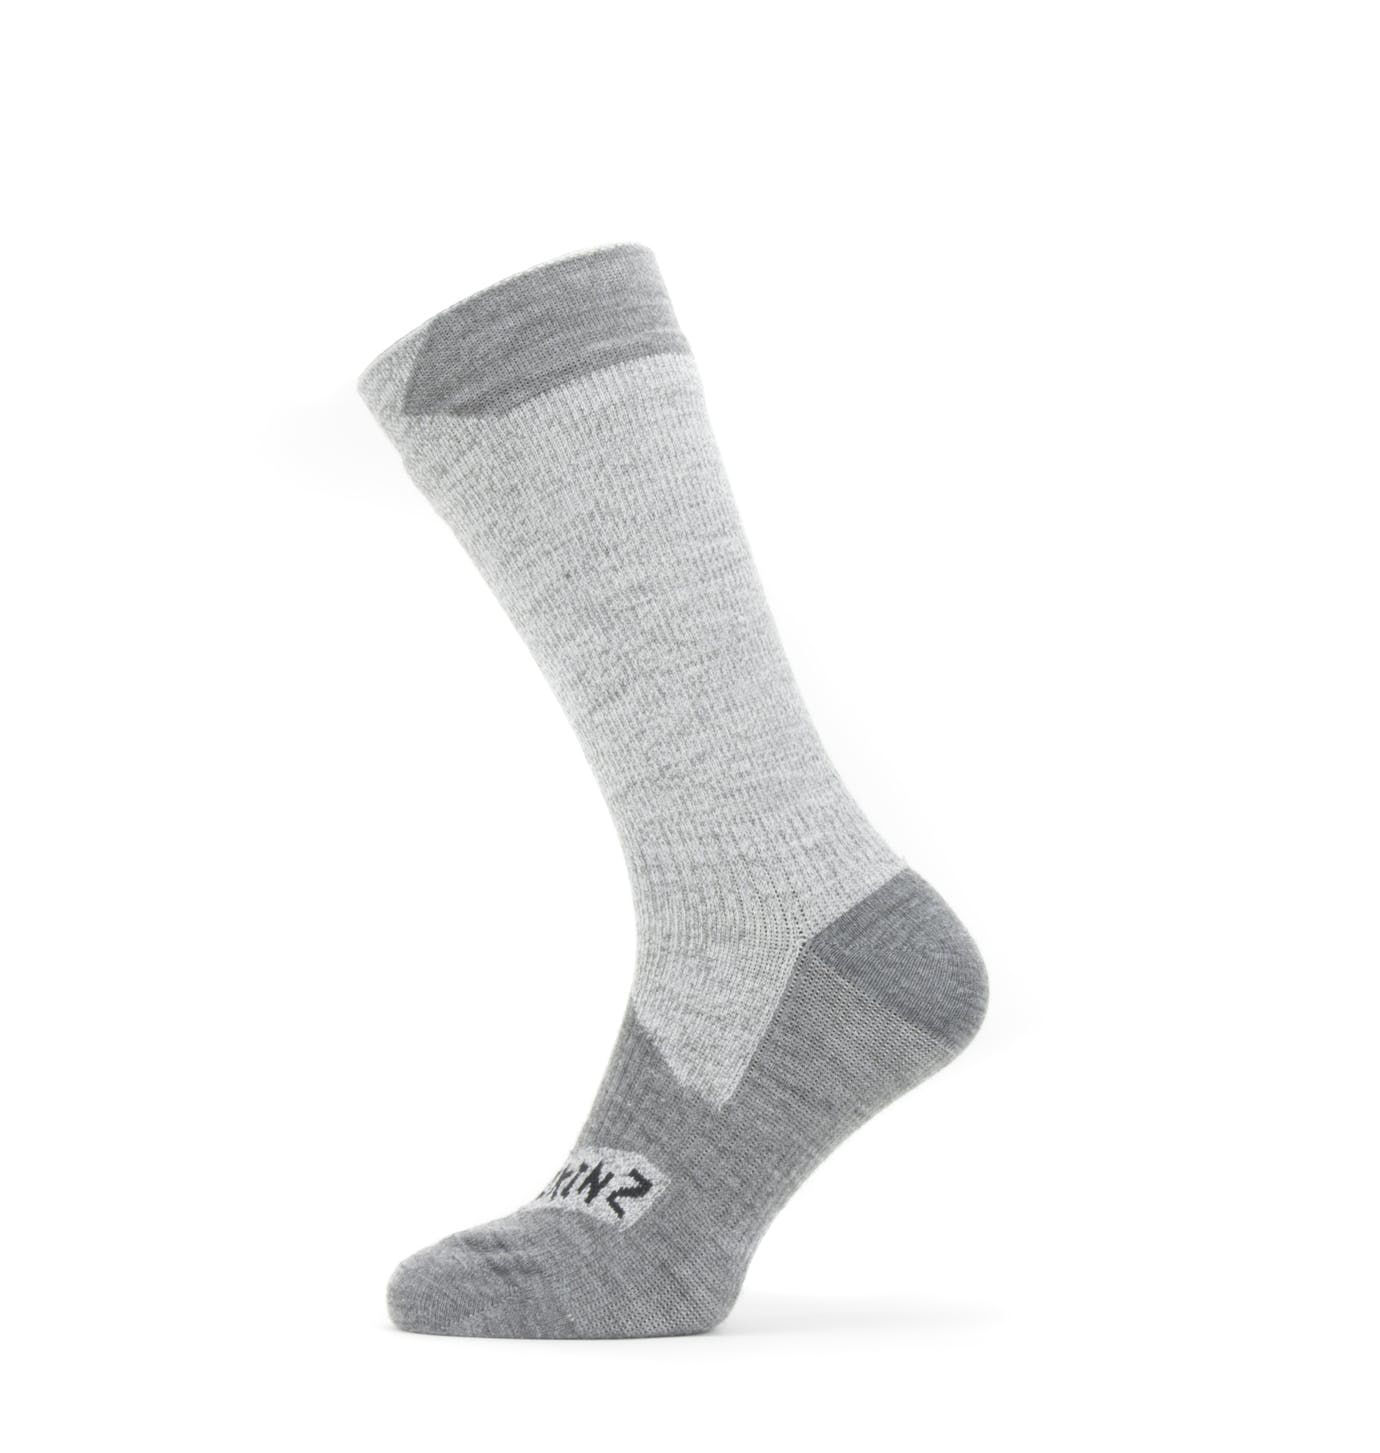 Sealskinz Waterproof All Weather Mid Sock in Grey / Grey Marl